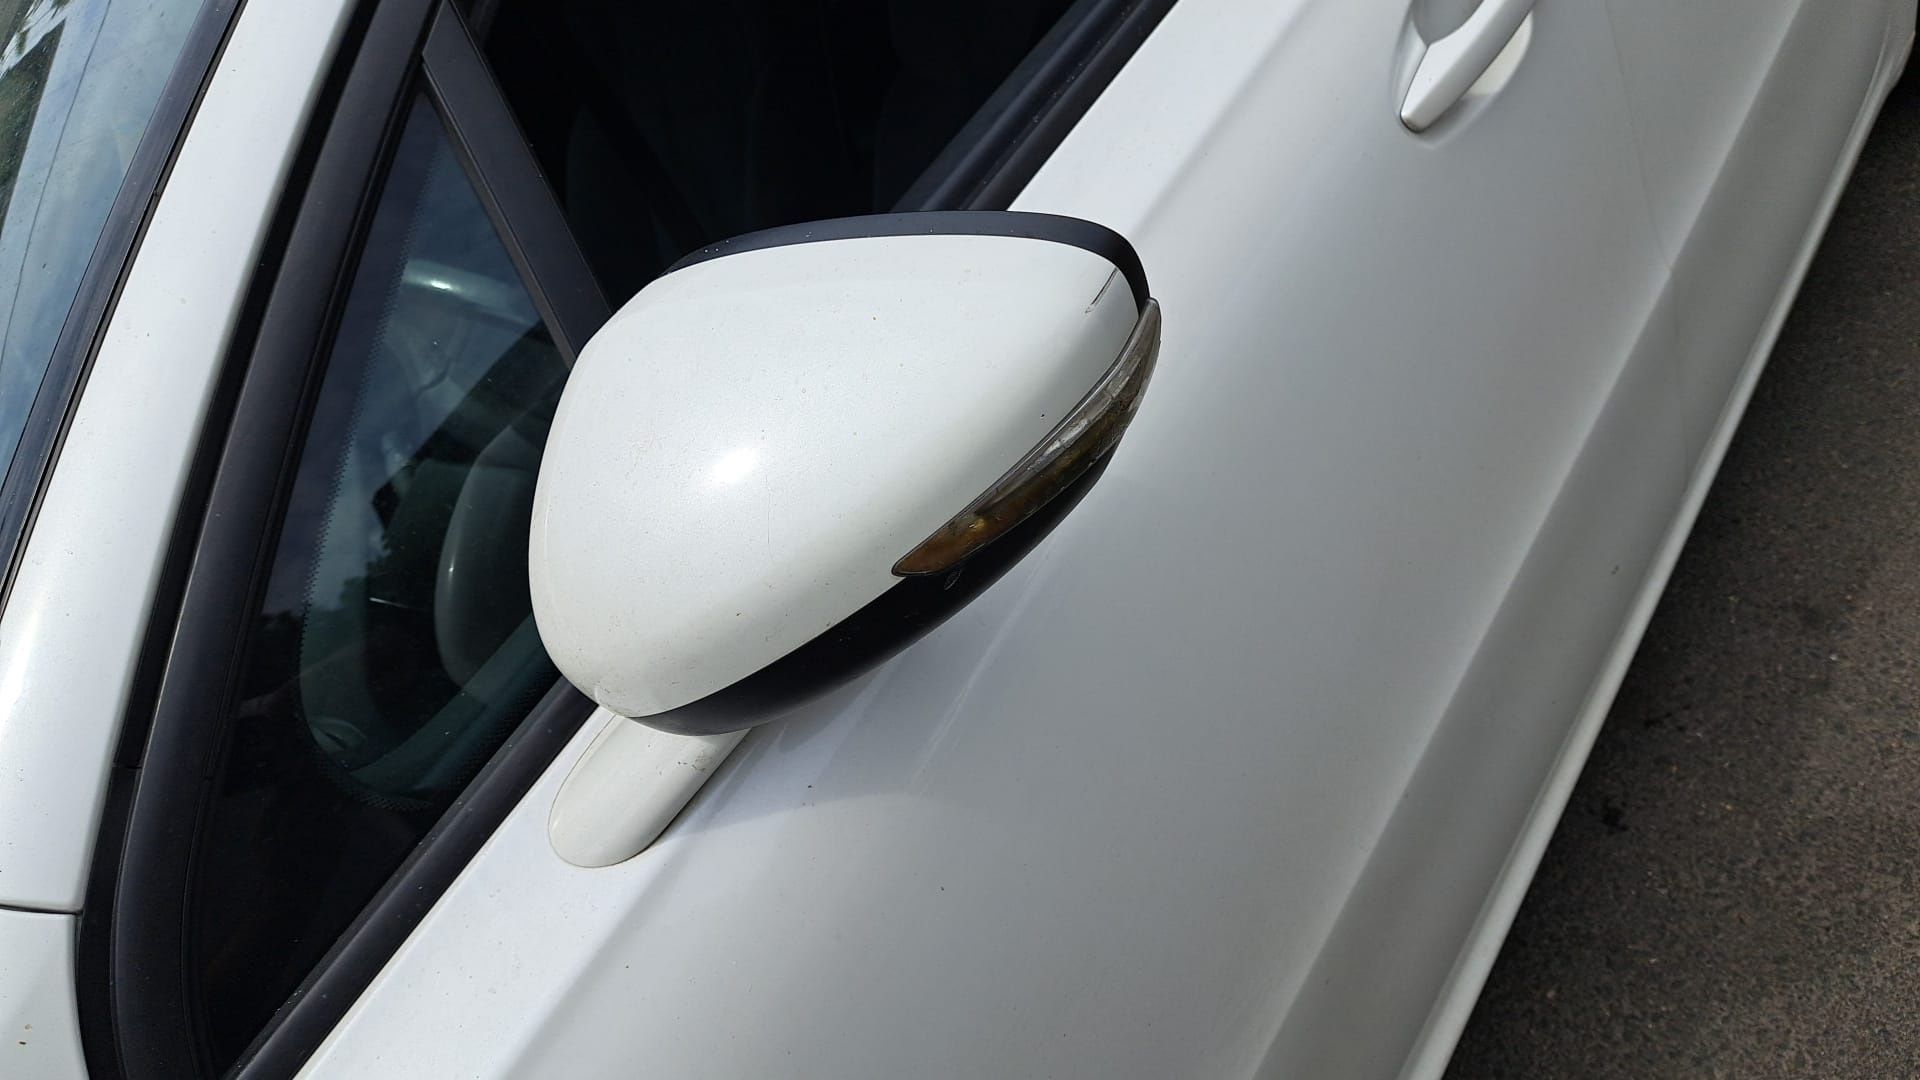 Oglinzi Peugeot 508 cu unghi mort